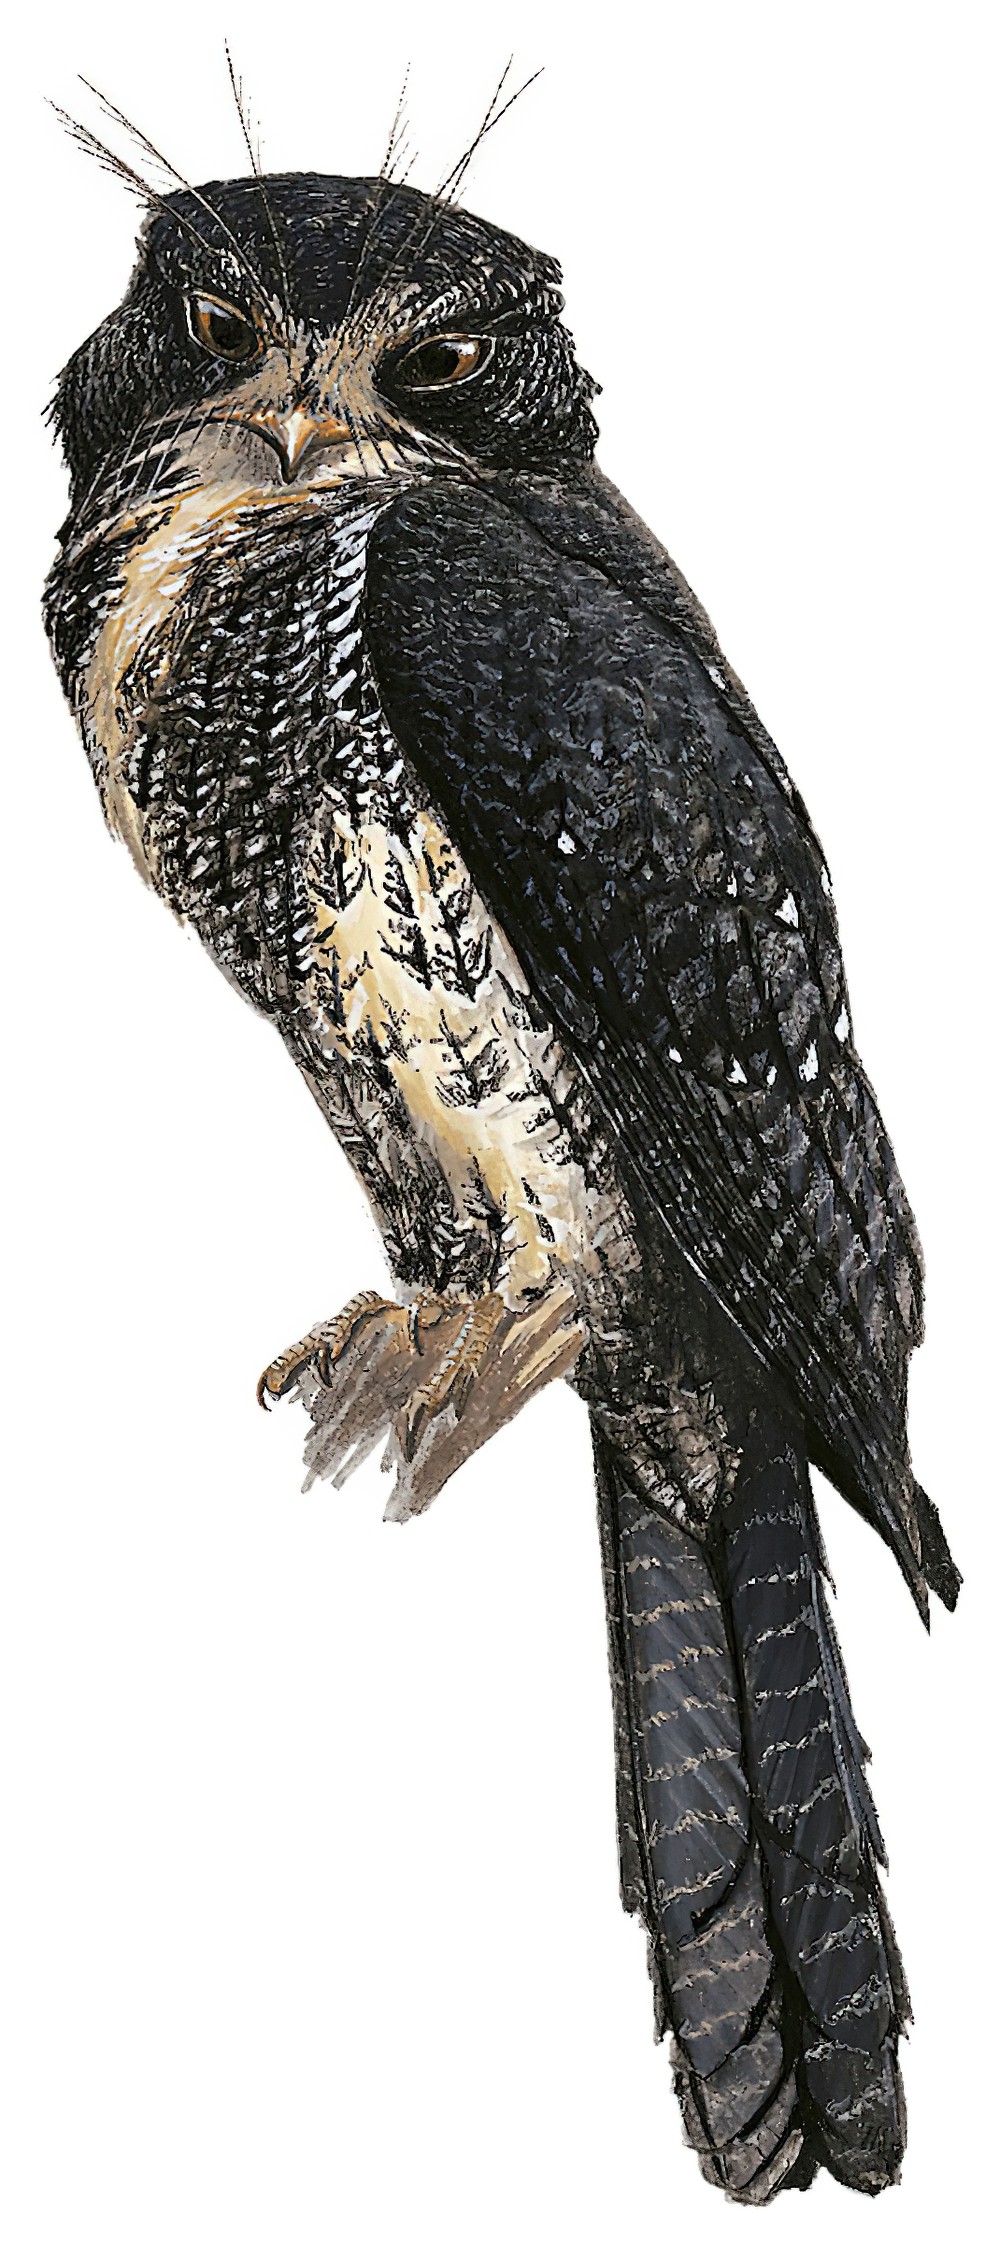 Moluccan Owlet-nightjar / Aegotheles crinifrons